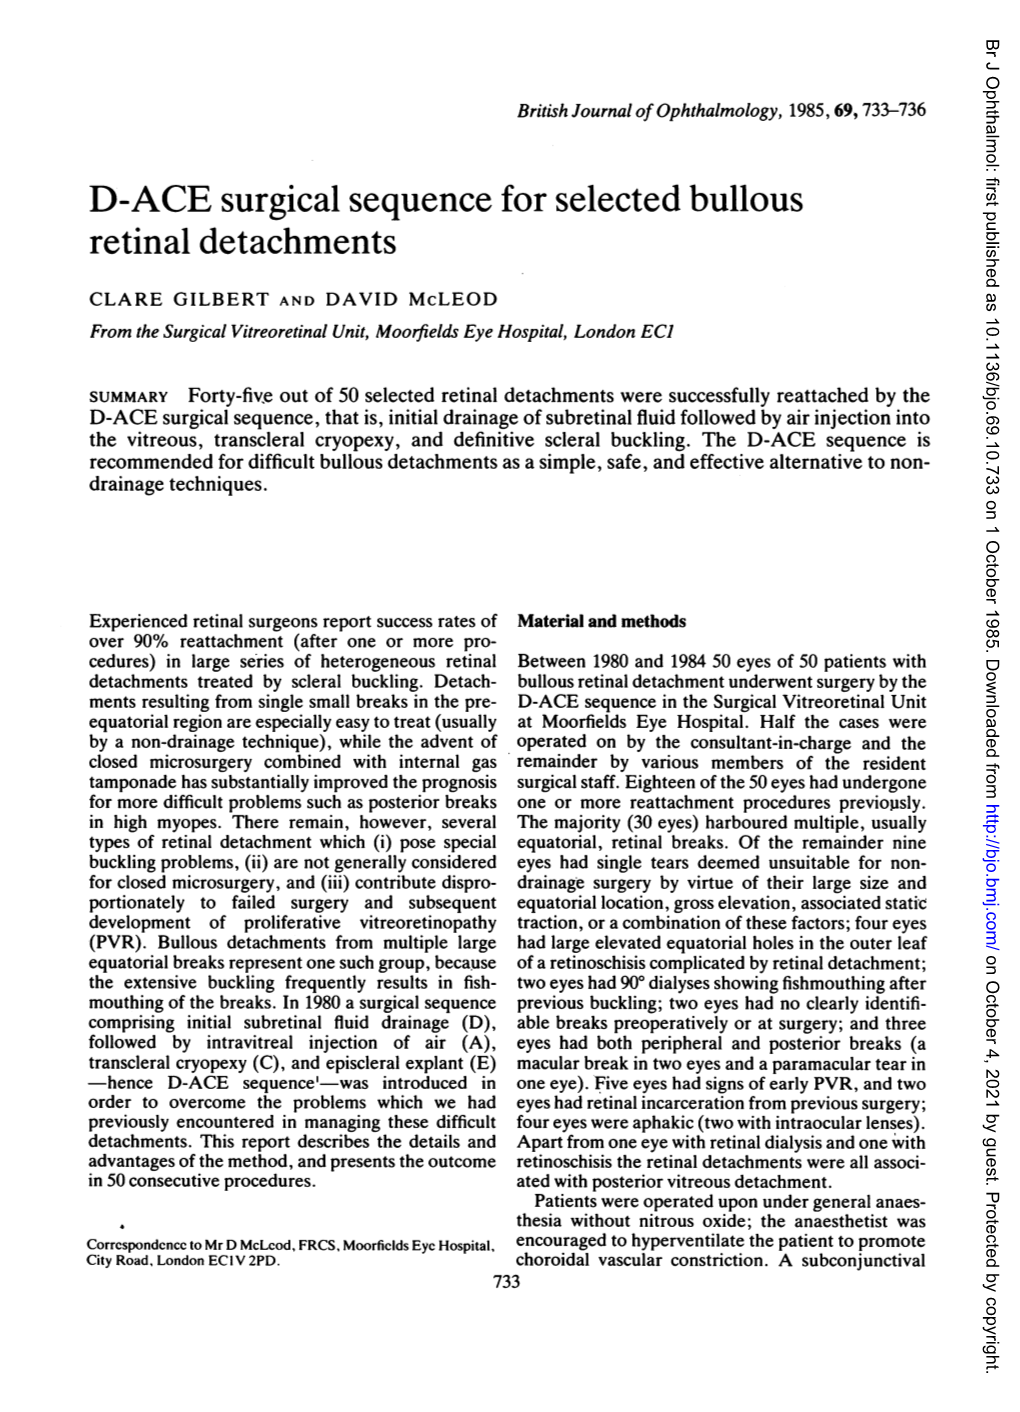 D-ACE Surgical Sequence for Selected Bullous Retinal Detachments